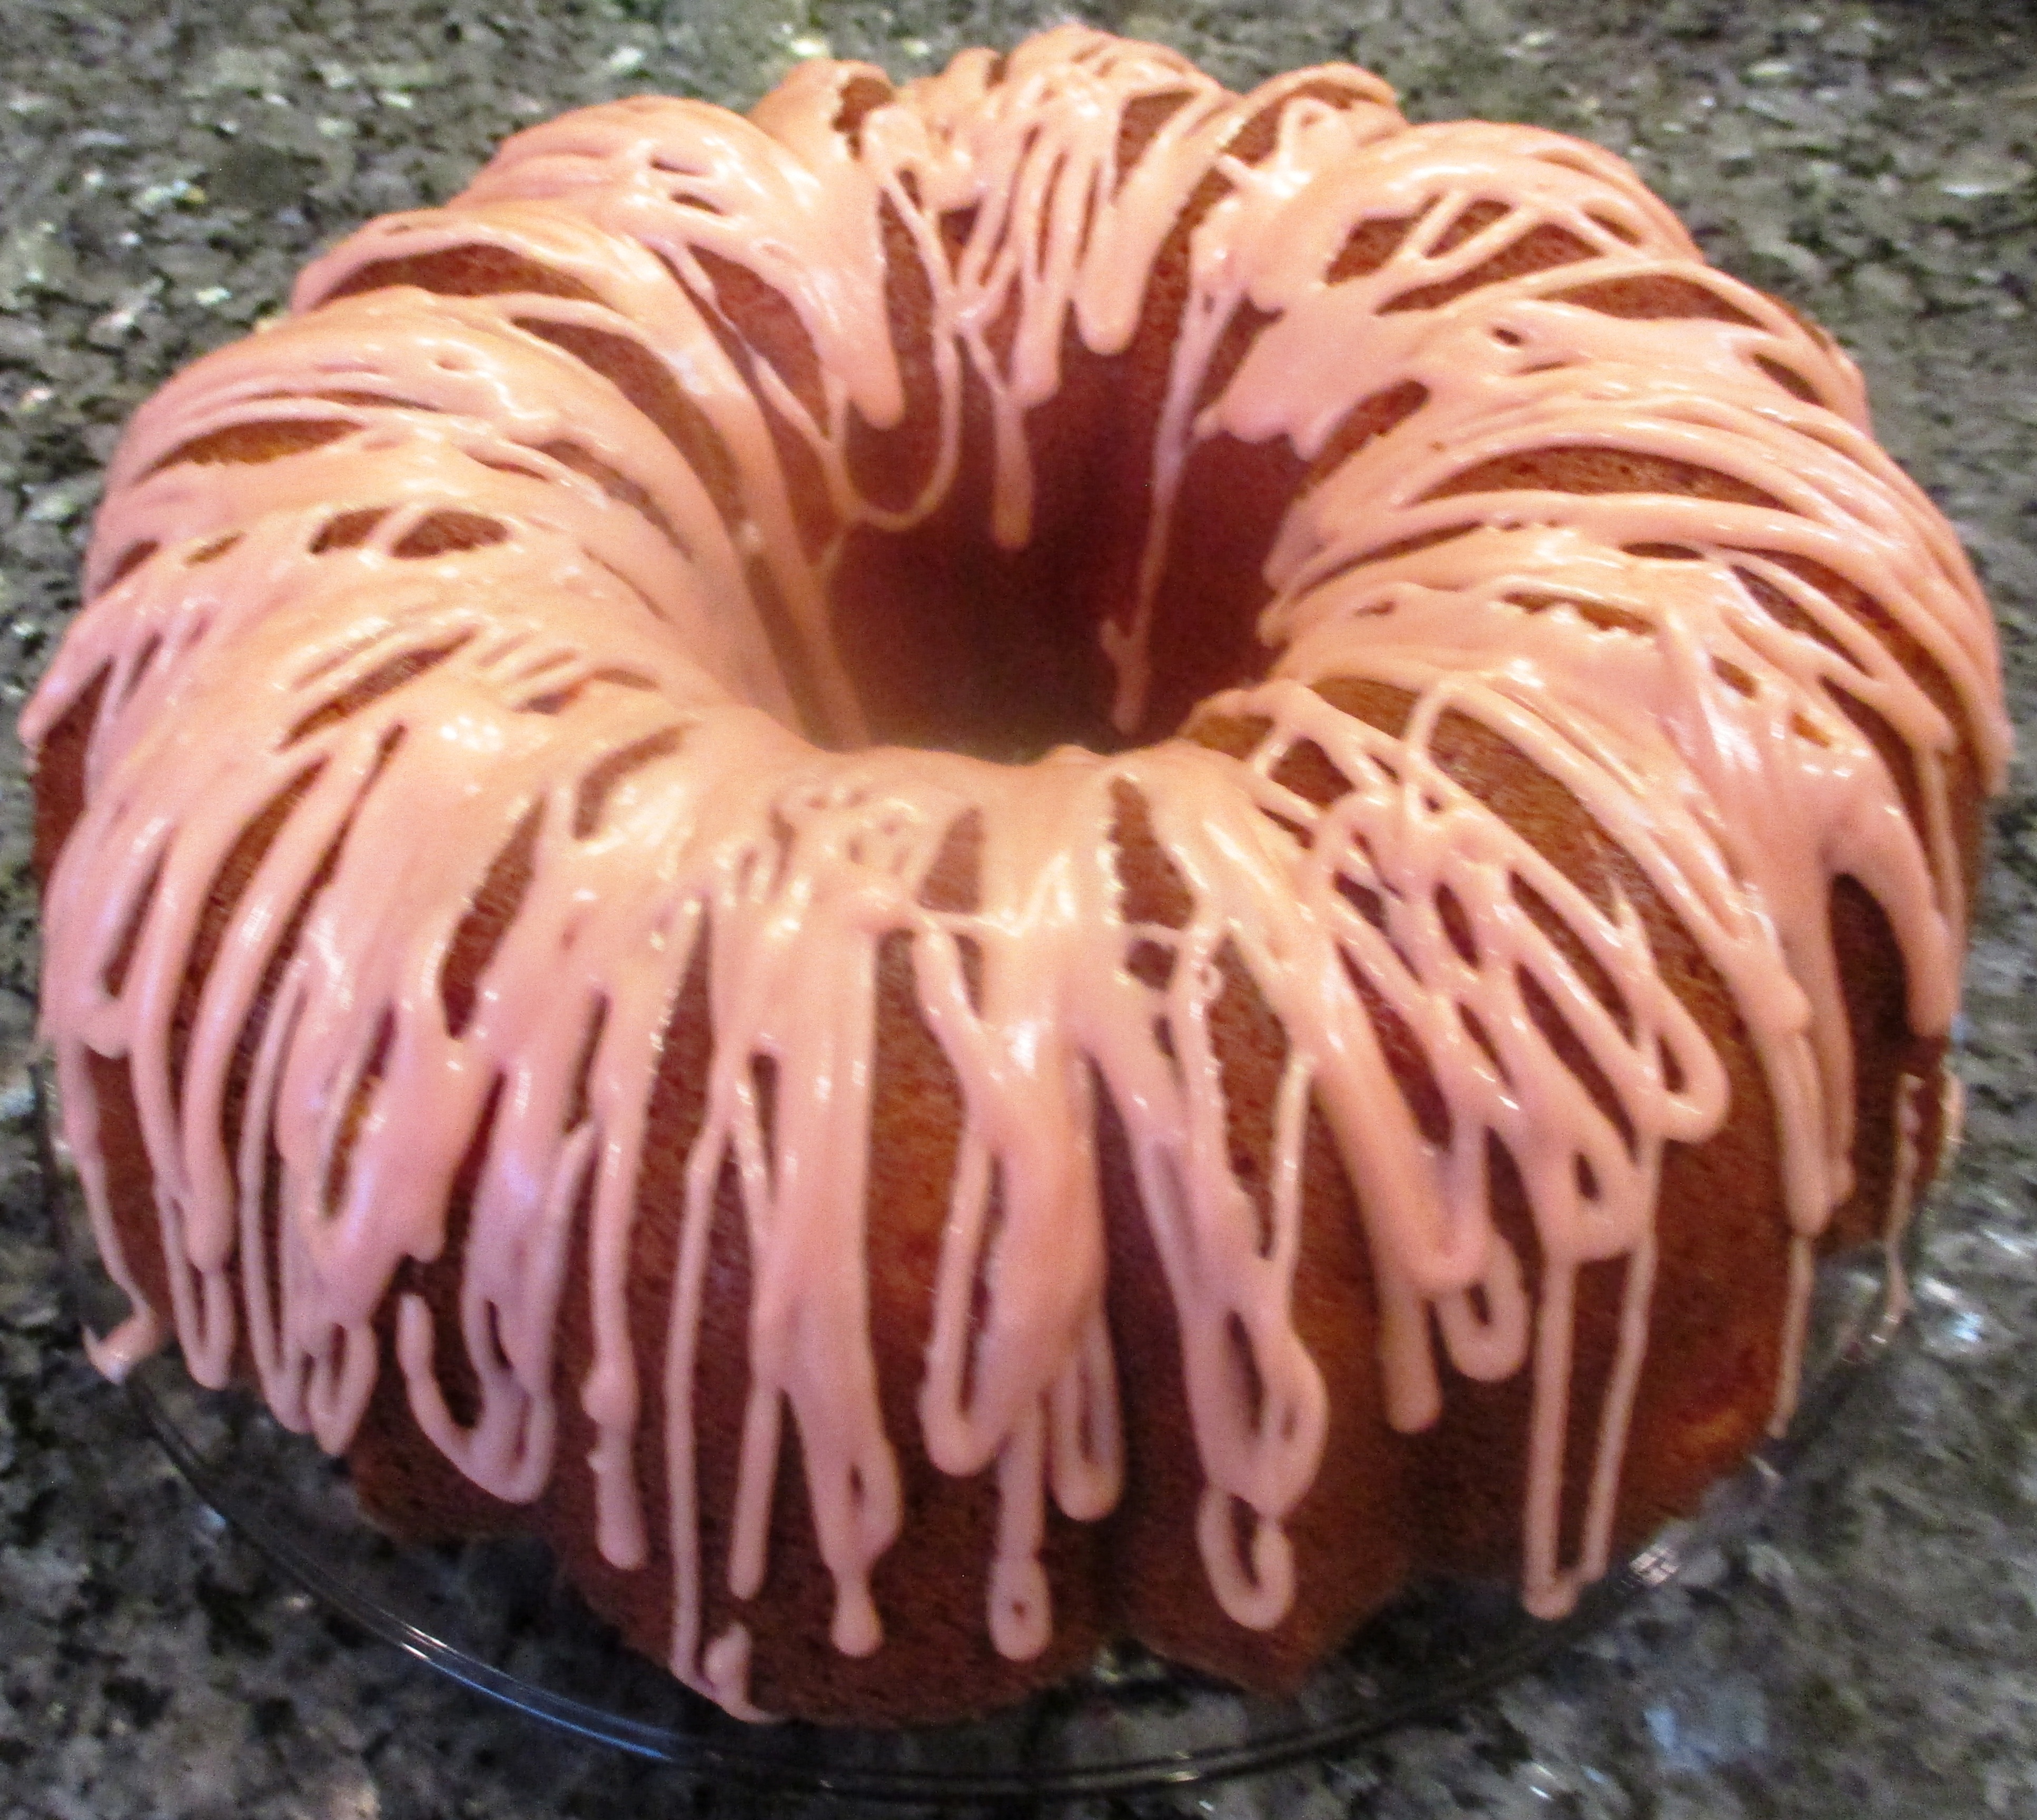 Shirley Temple Cake Recipe